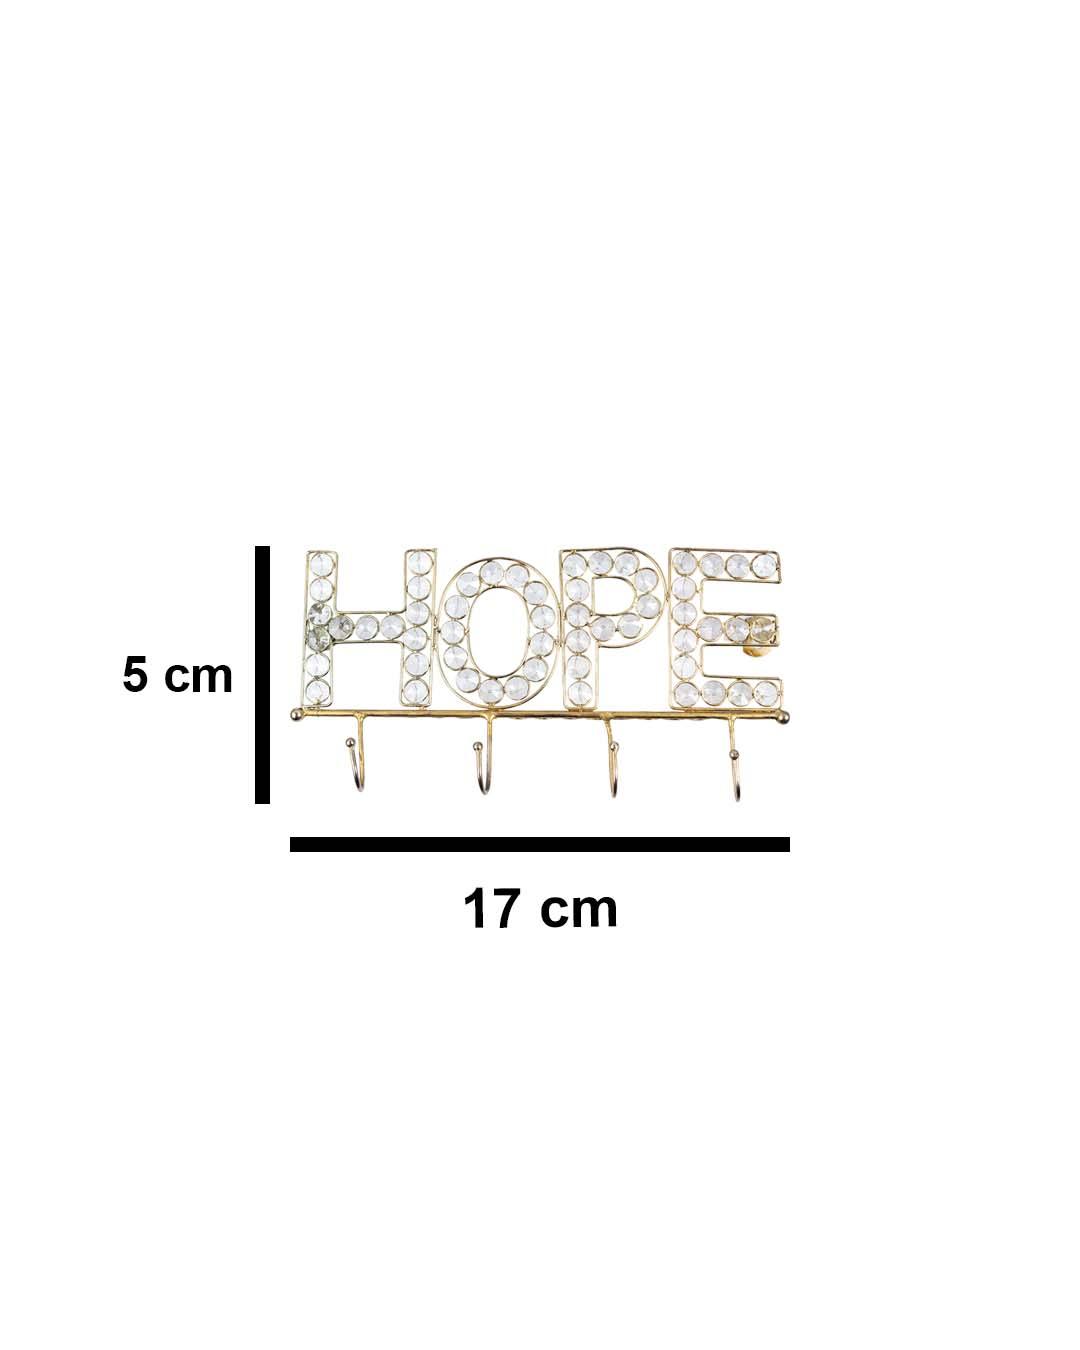 "HOPE Sign" Crystal Wall Hook, 4 Hooks, Golden, Iron - MARKET 99